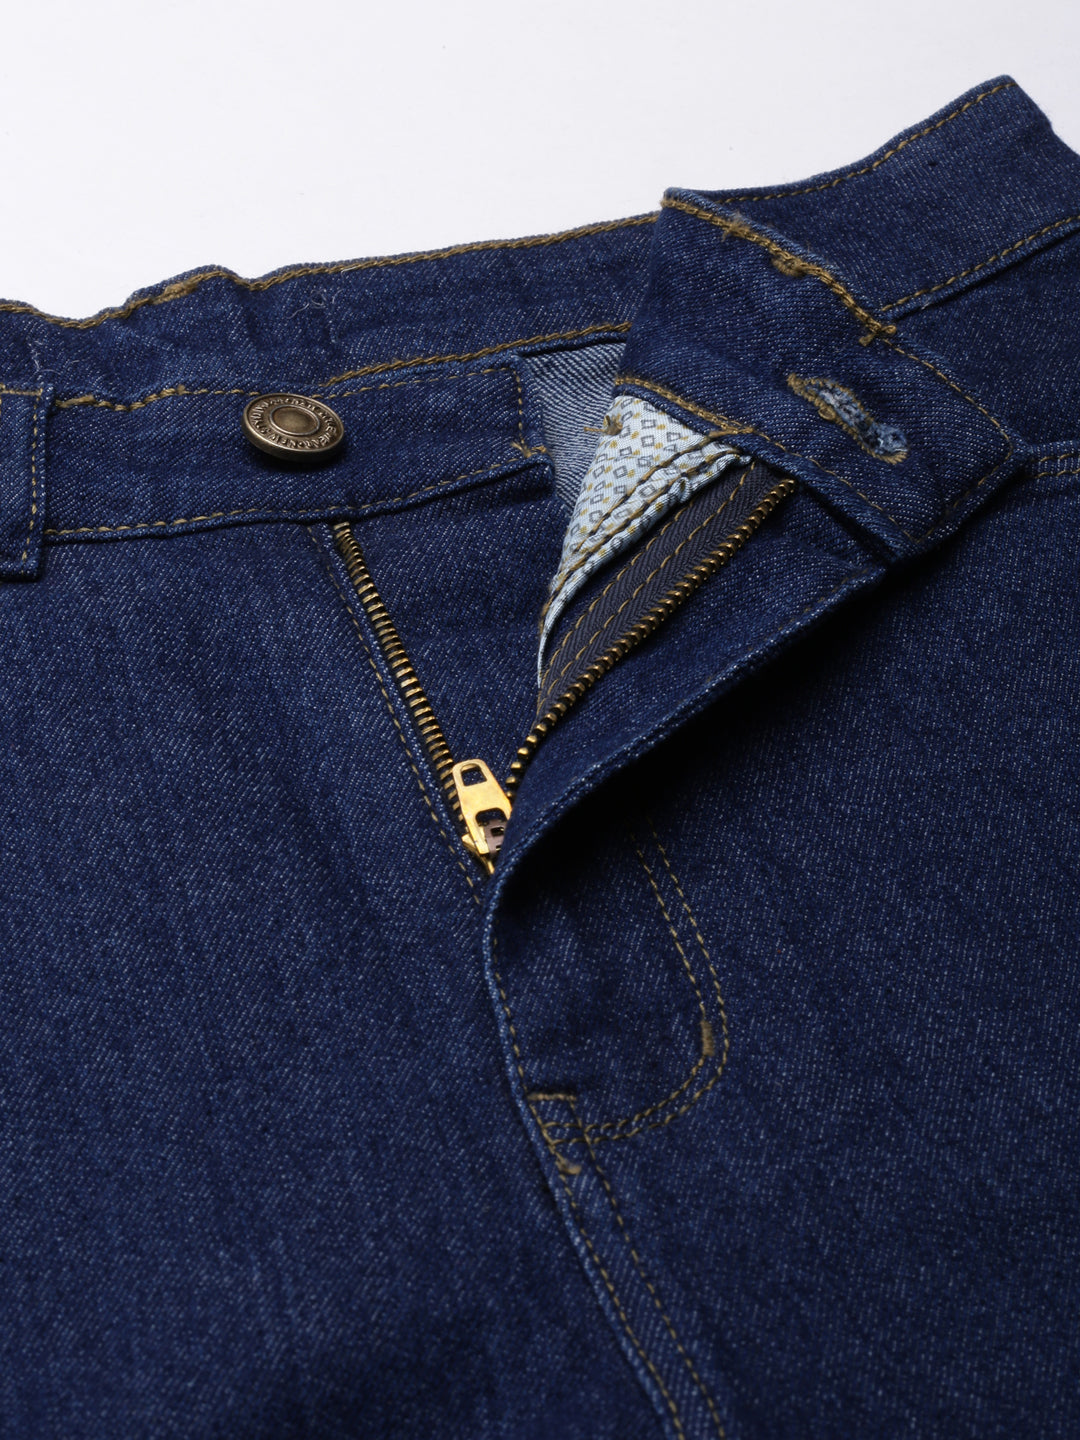 Women Navy Blue Solid Flared Denim Jeans